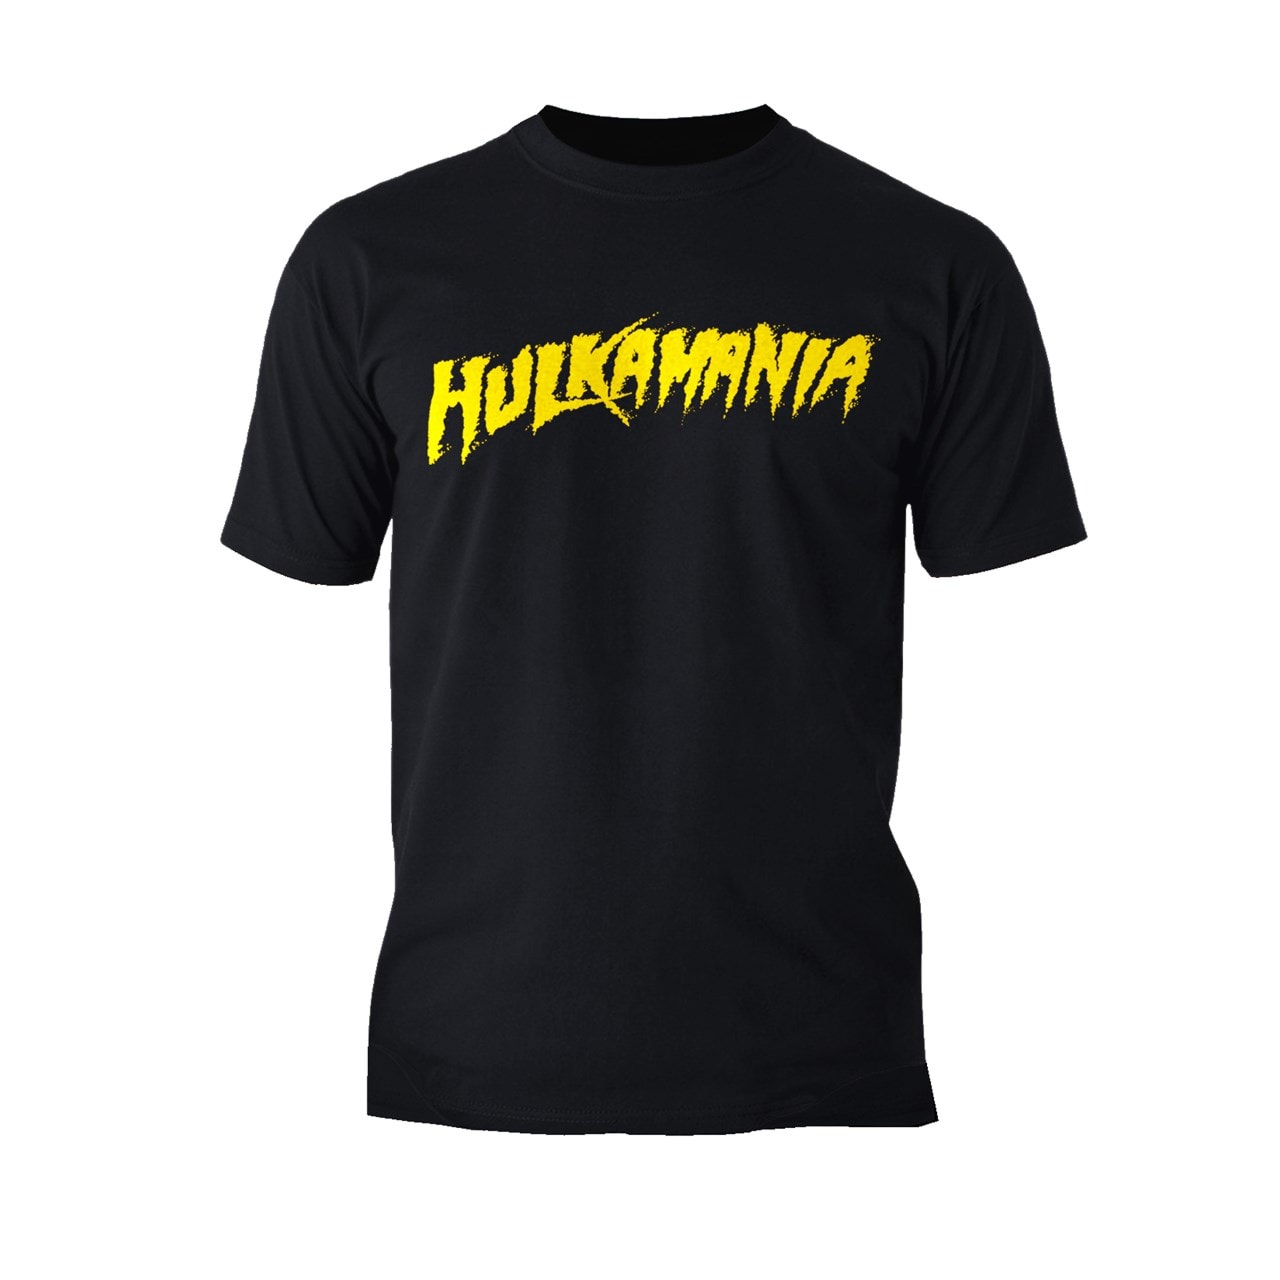 WWE: Hulkamania Logo Black | T-shirt | Free shipping over £20 | HMV Store